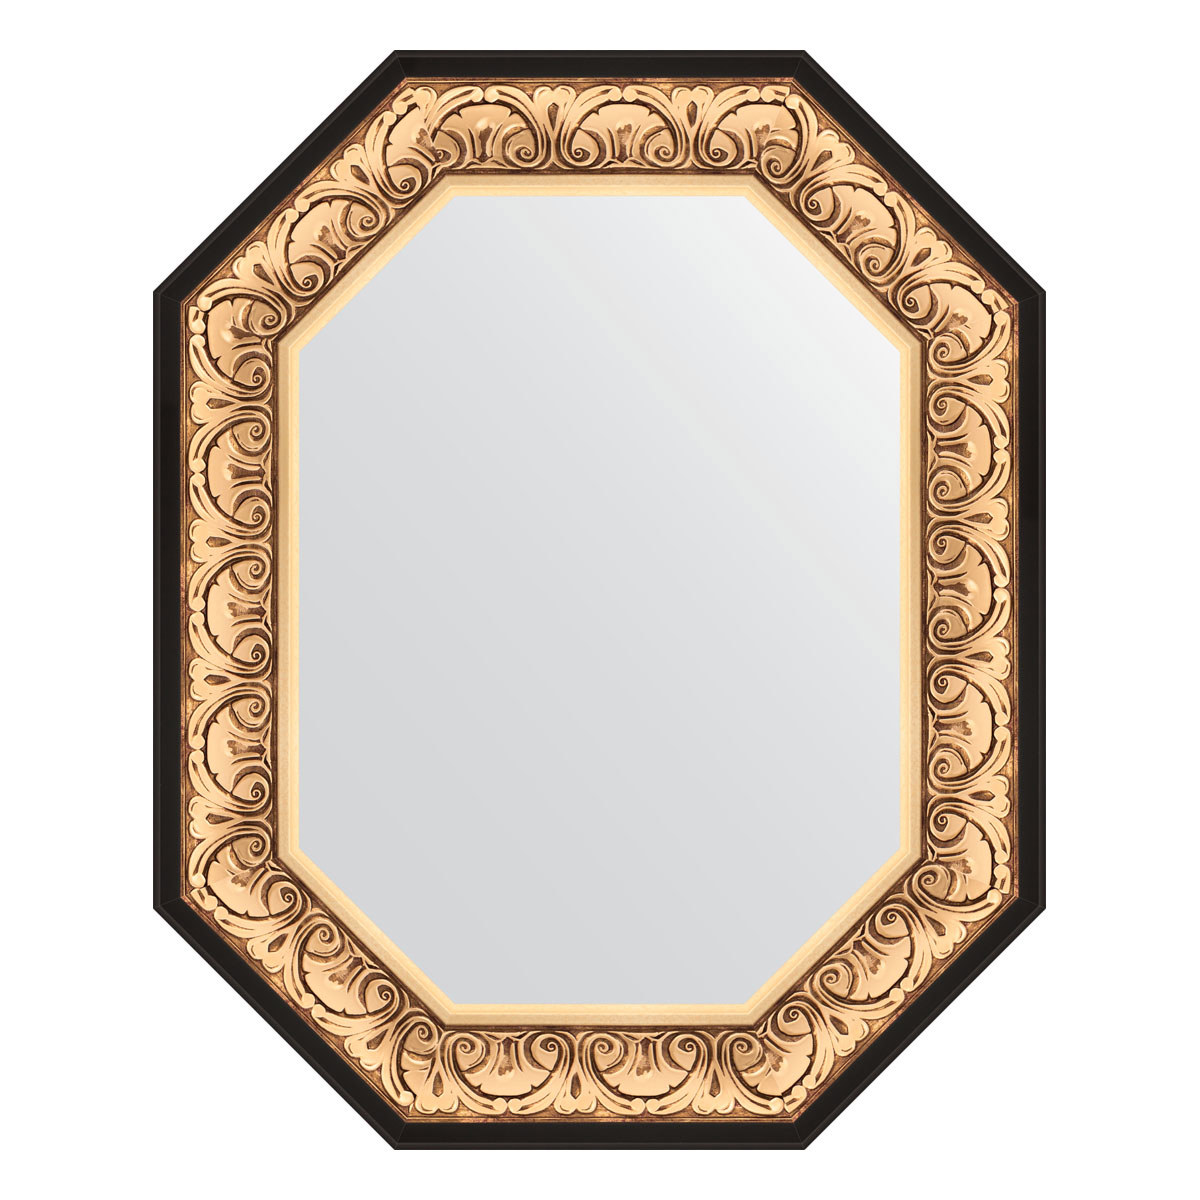 90313841 Зеркало в багетной раме барокко золото 106 мм 65x80 см BY 7242 POLYGON STLM-0180735 EVOFORM